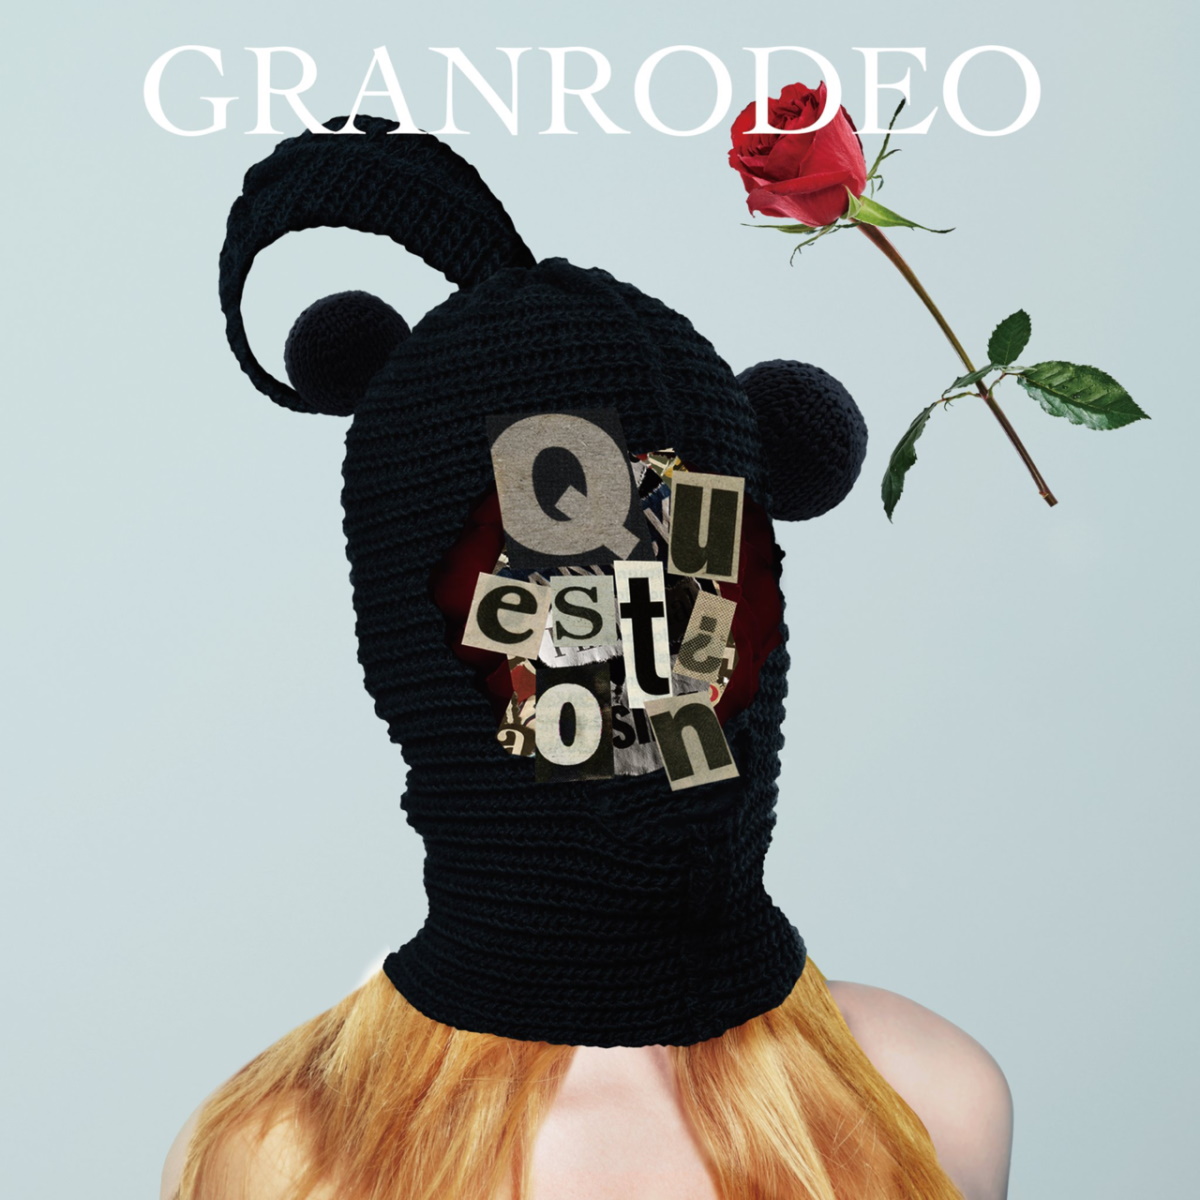 『GRANRODEO - 恋はハチャメチャ 歌詞』収録の『Question』ジャケット